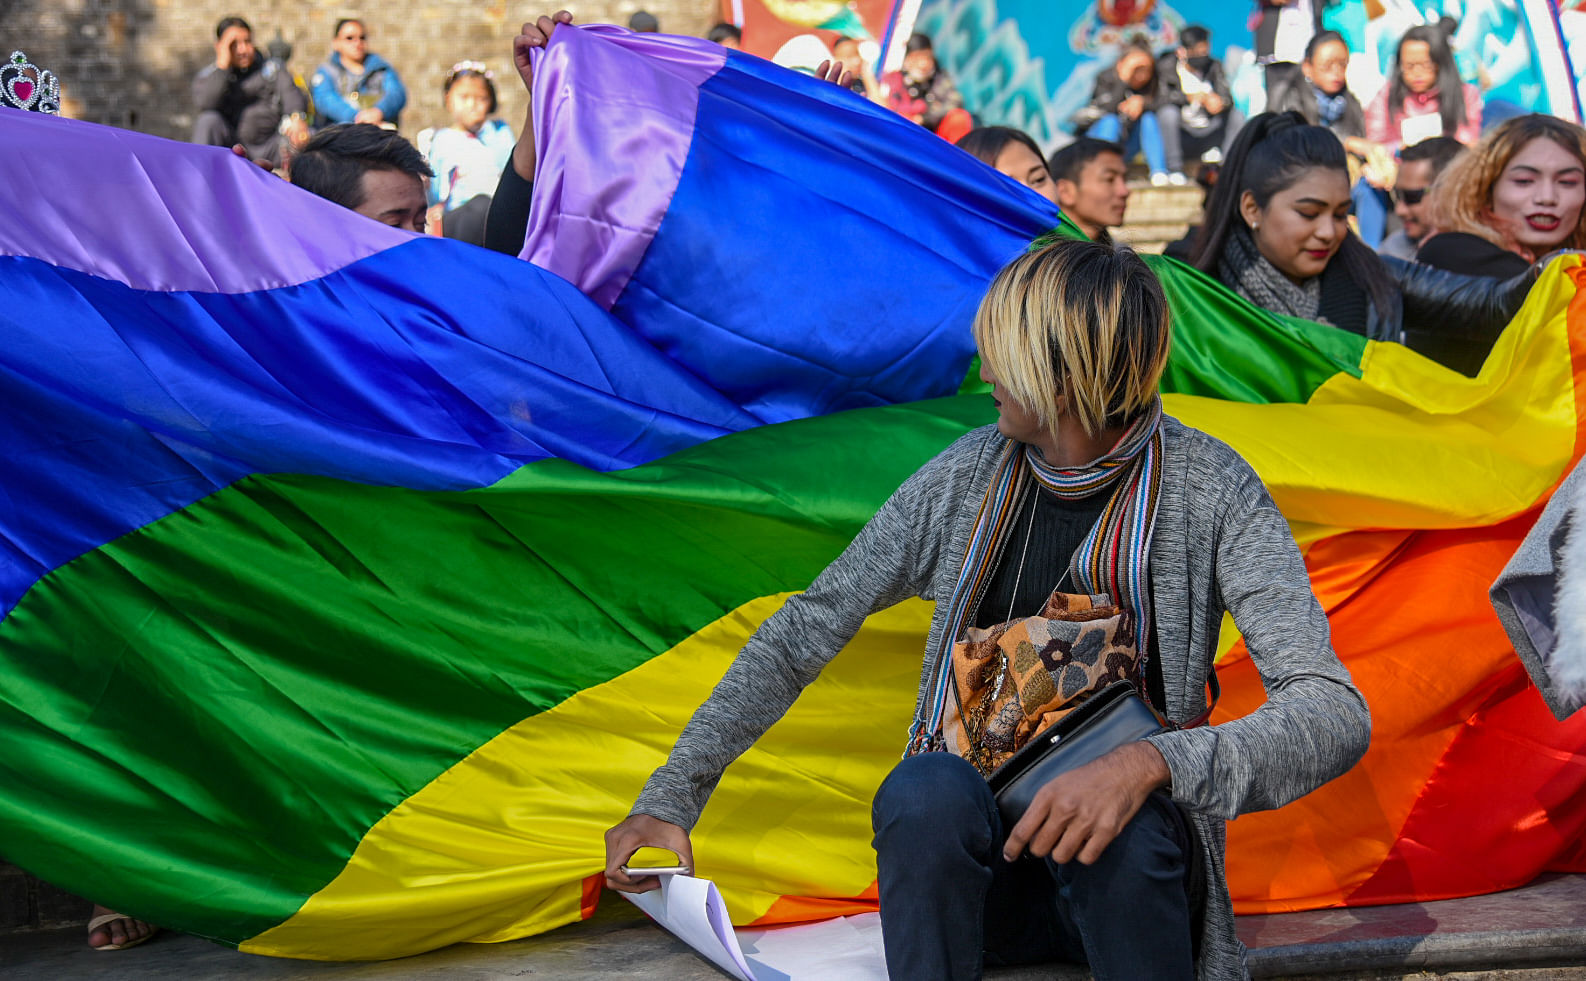 People unfurl the rainbow flag to celebrate LGBTQI+ communities.